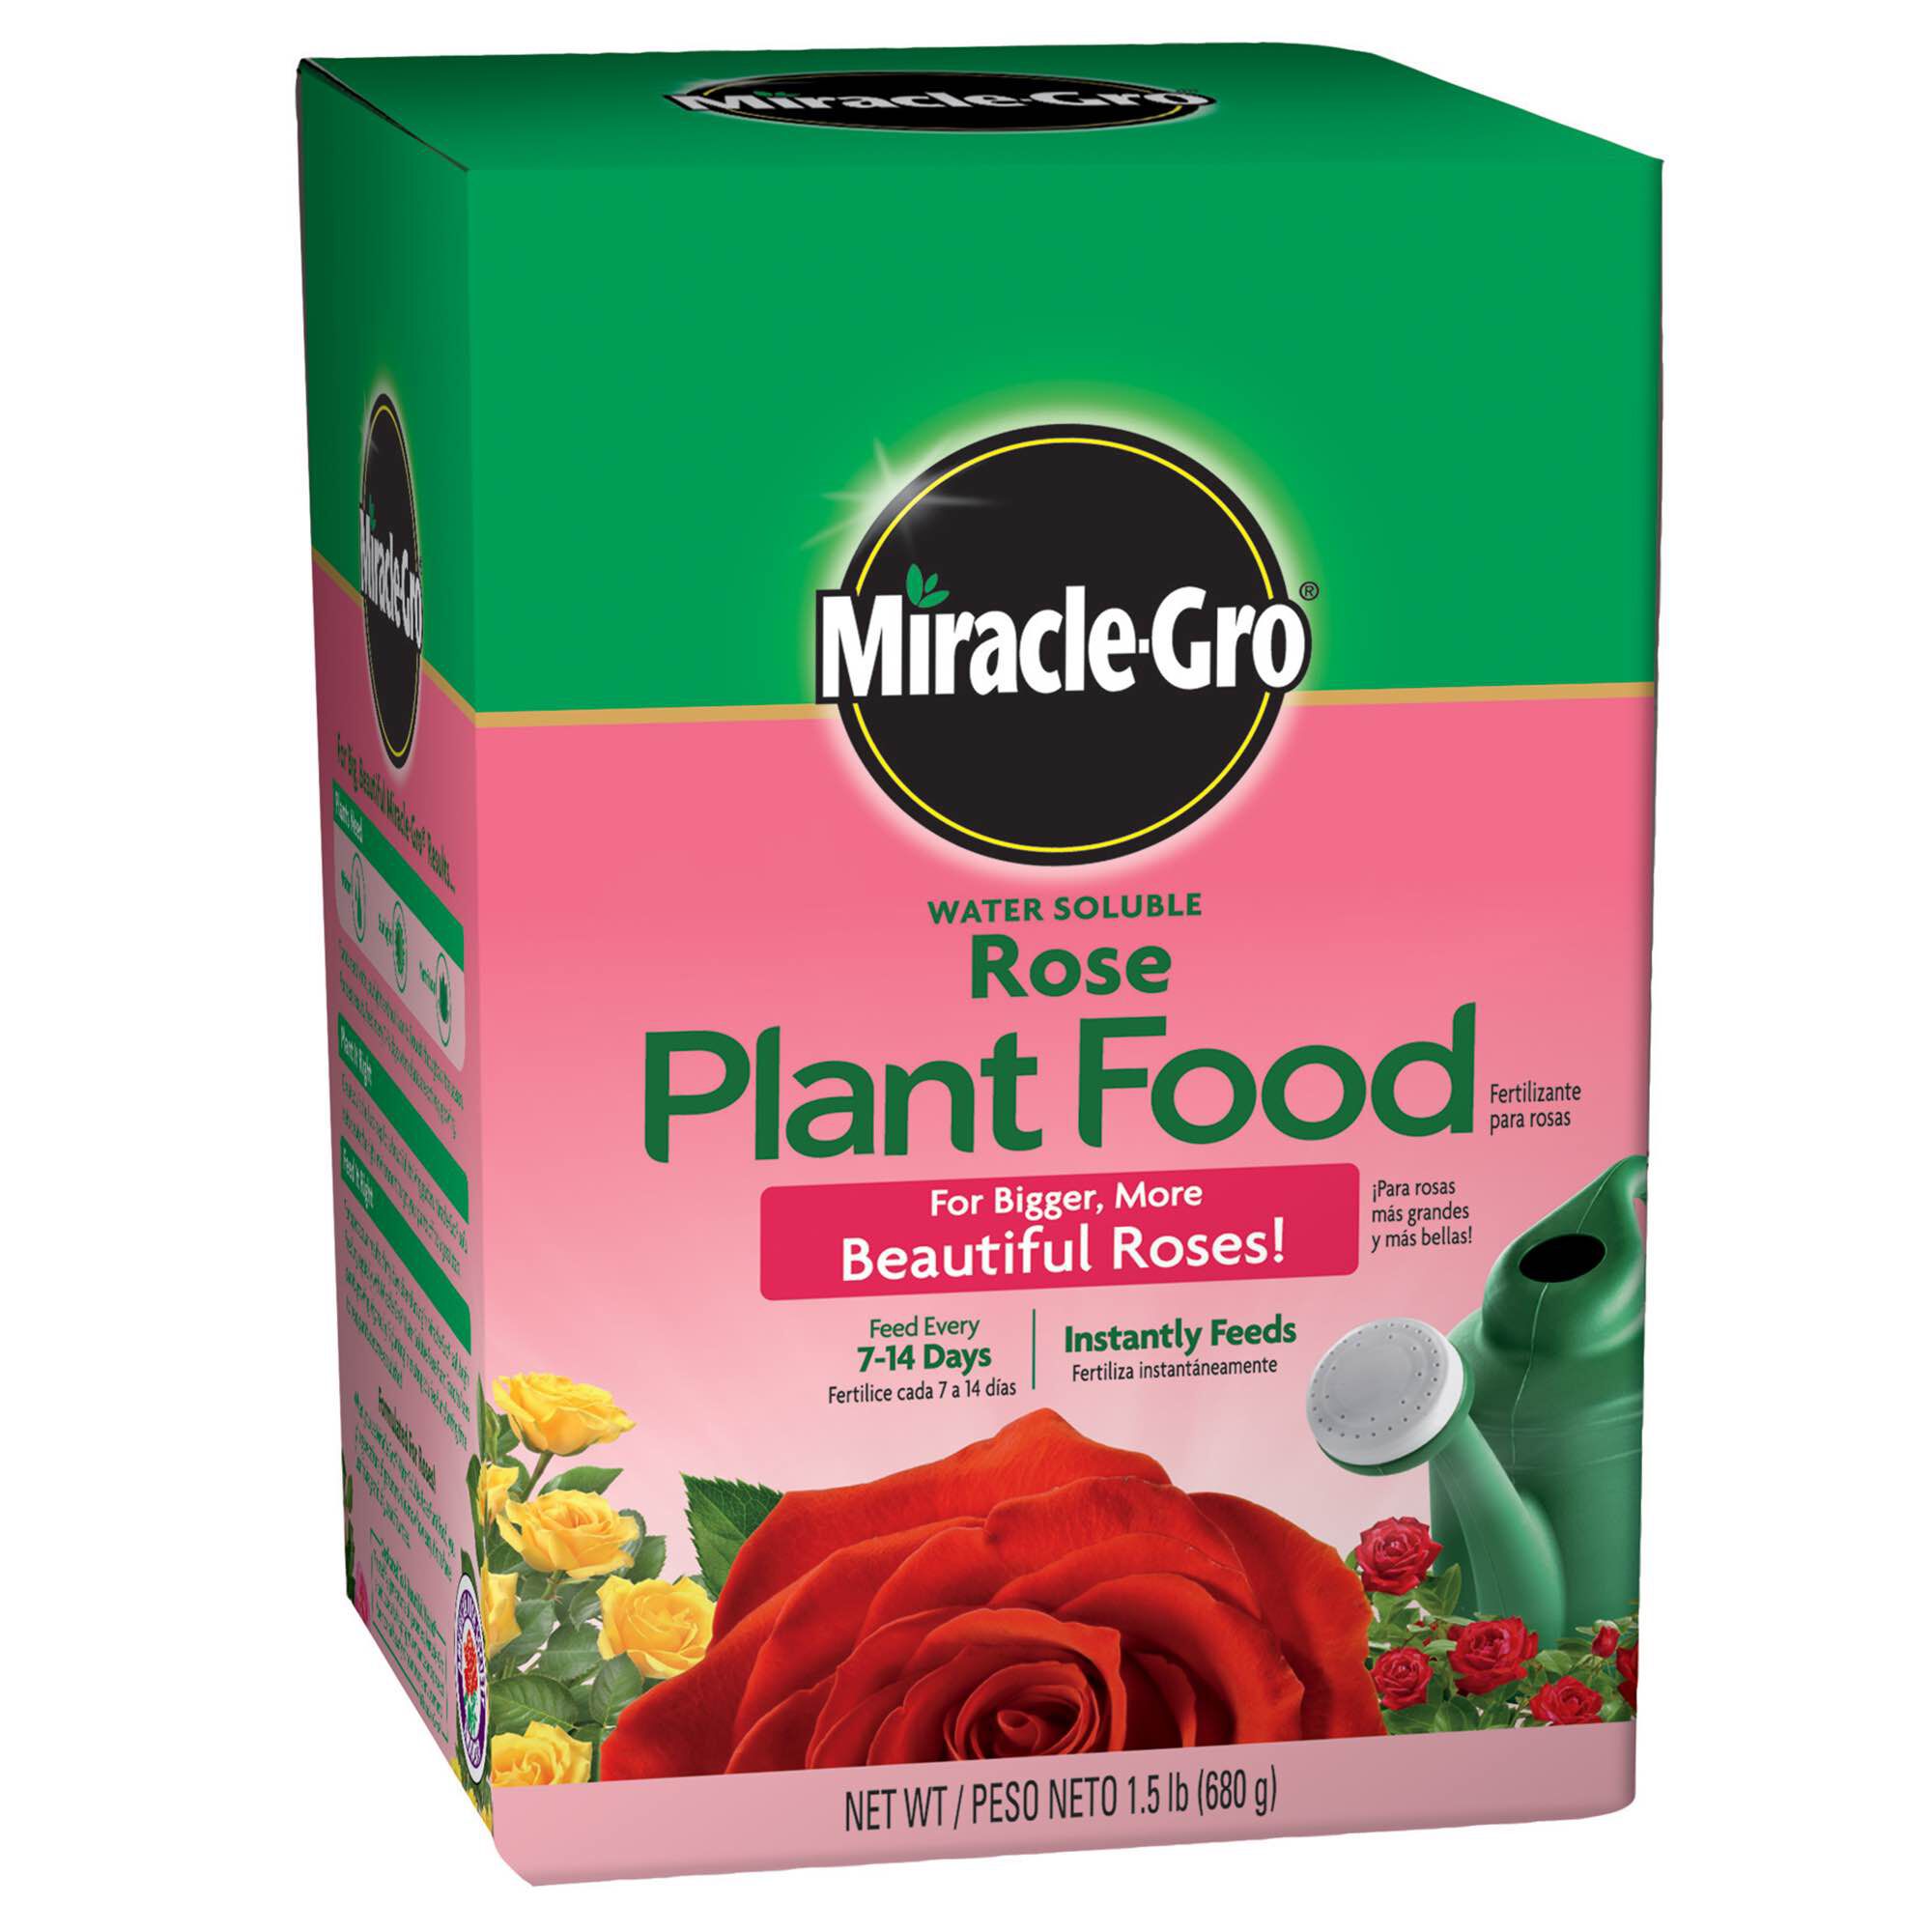 Image of Miracle-Gro Rose Plant Food fertilizer